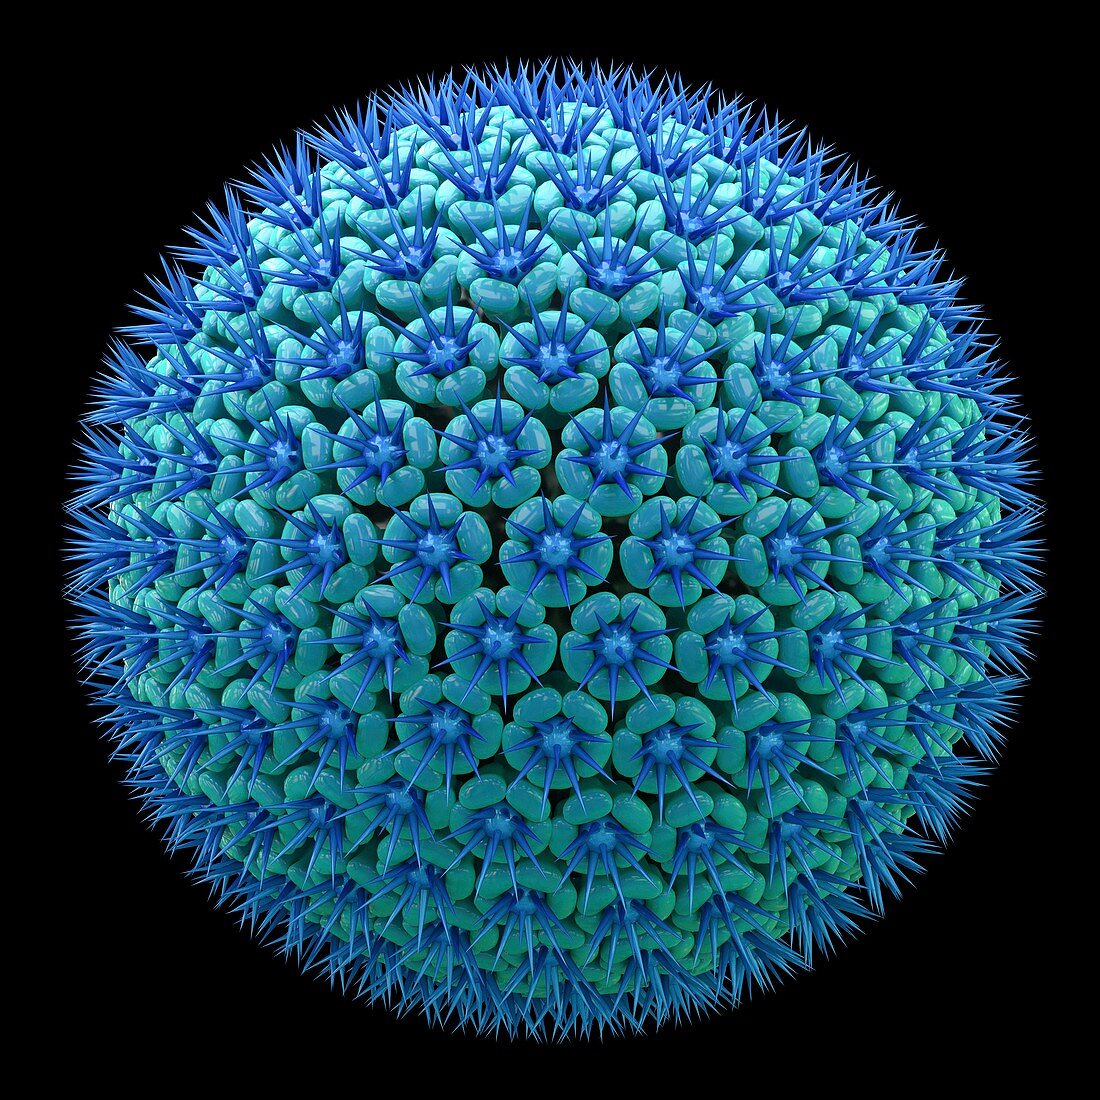 Virus particle,illustration